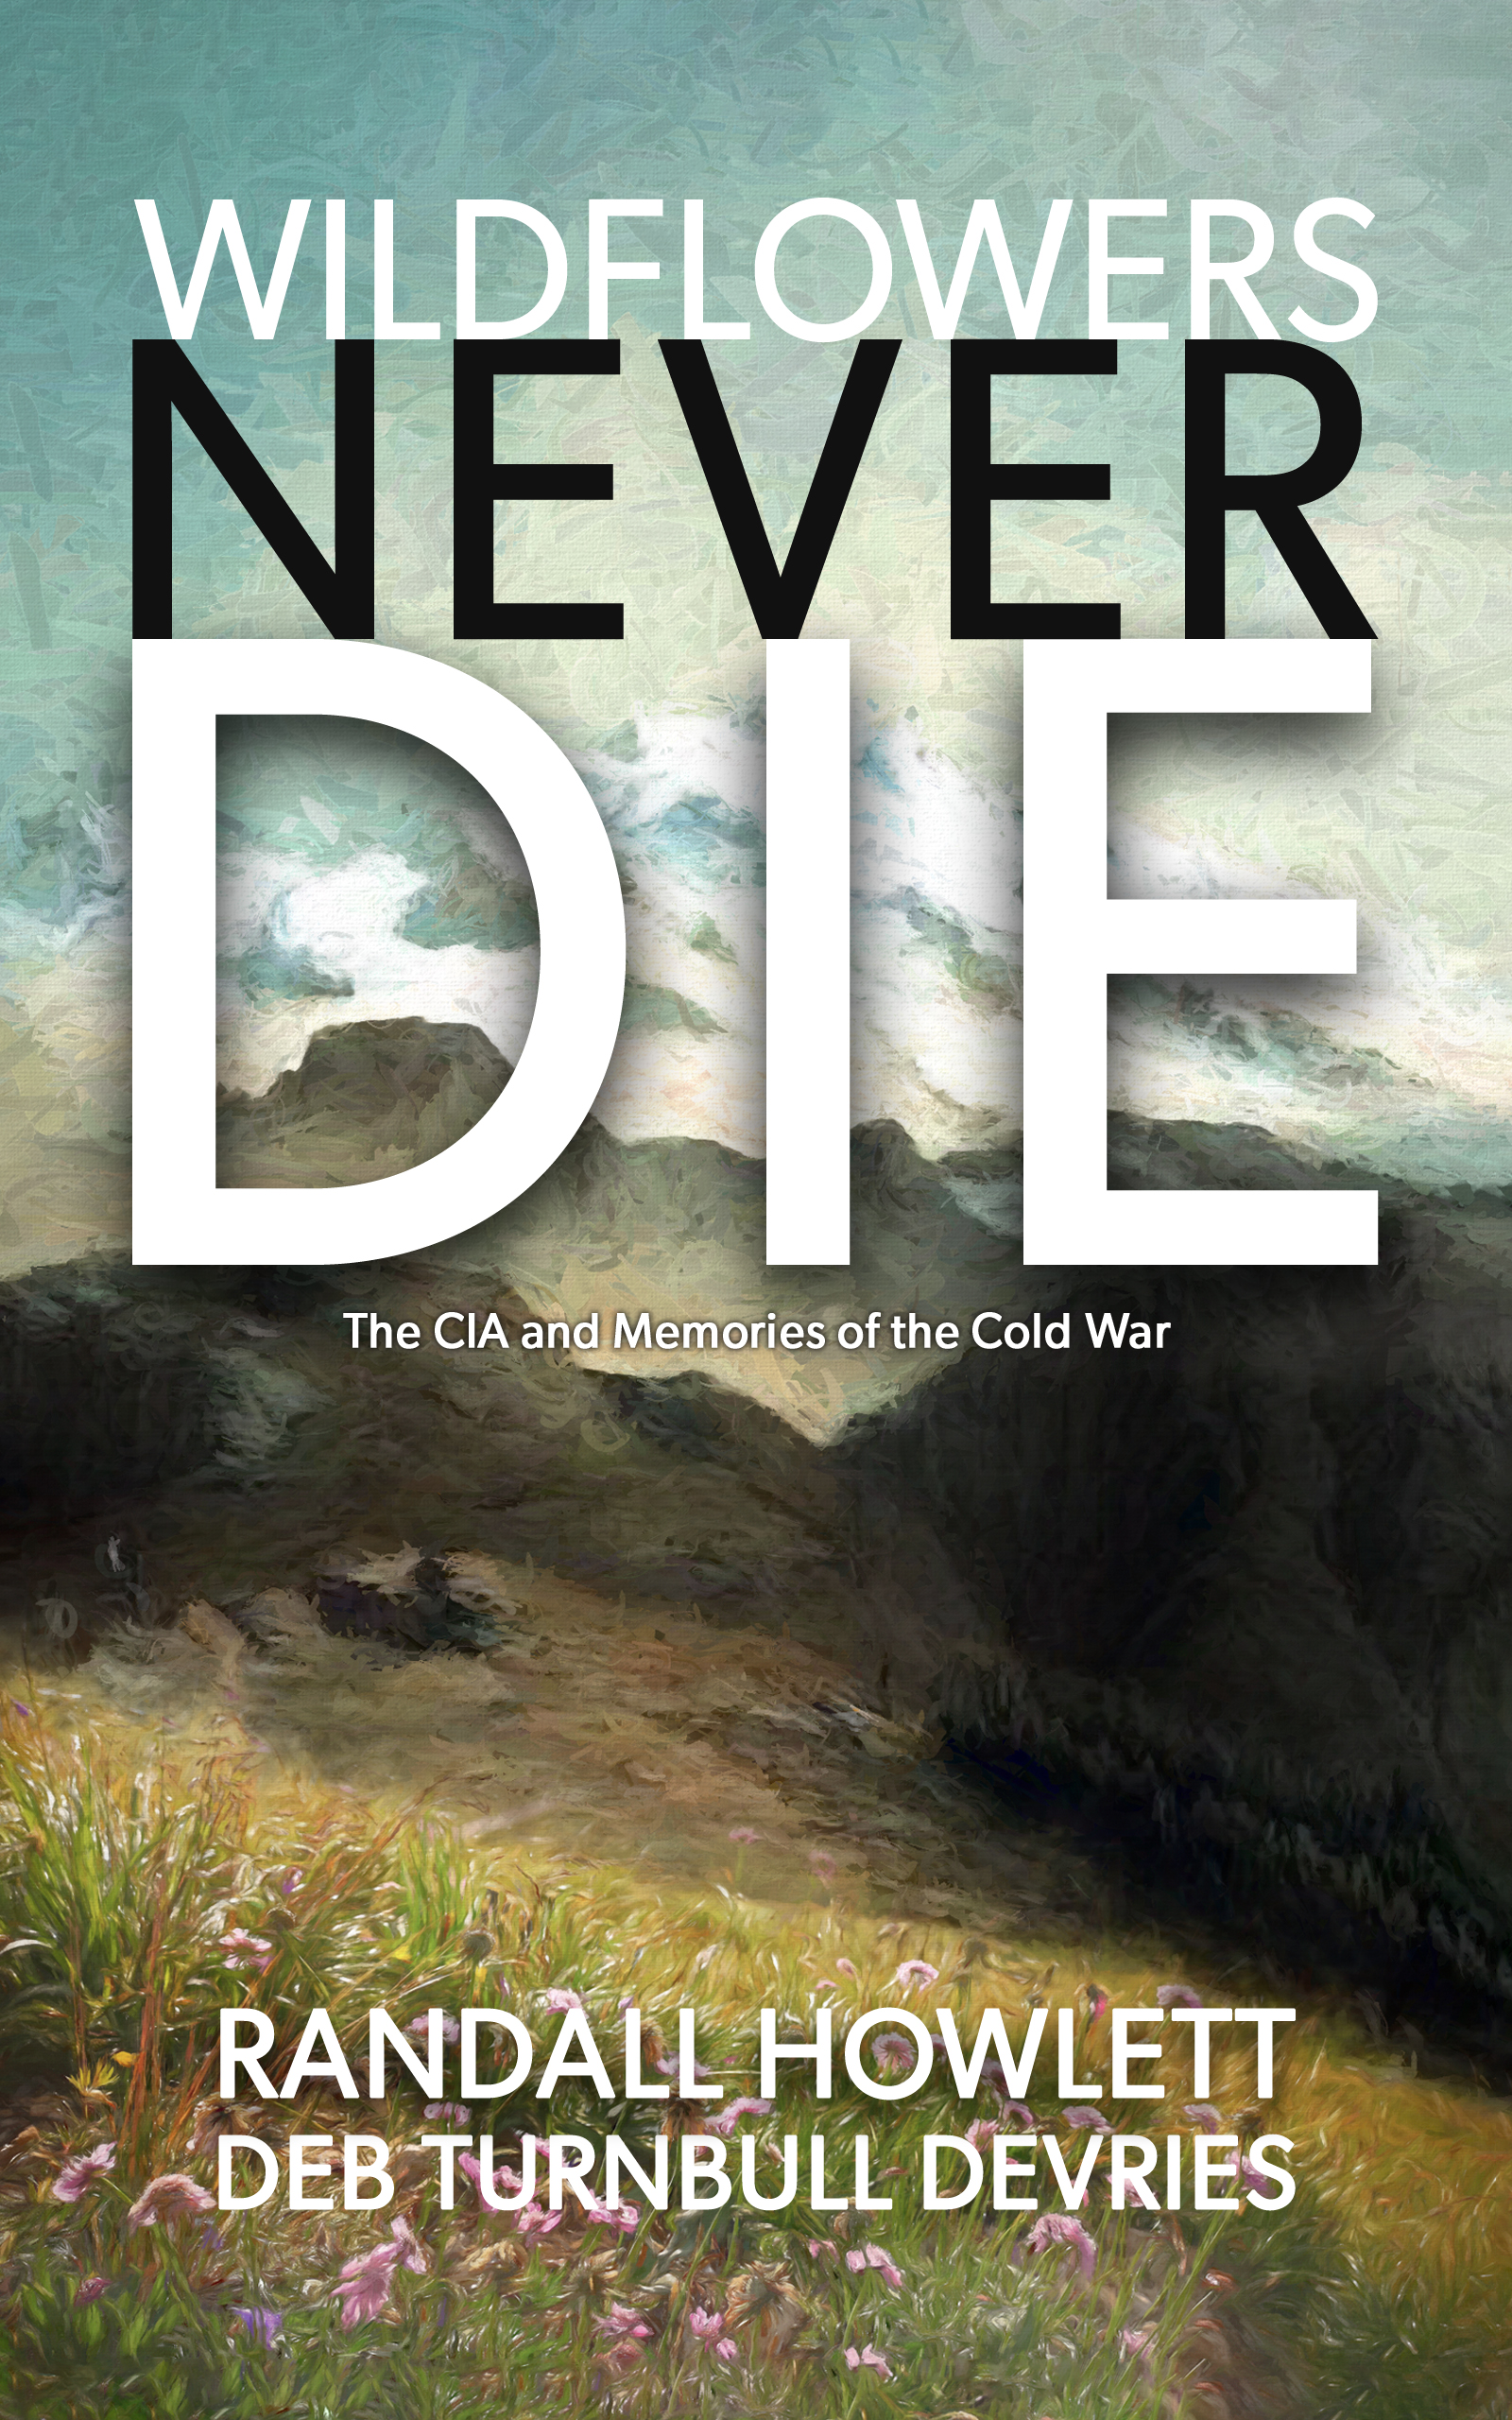 Wildflowers Never Die by Randall Howlett and Deb Turnbull DeVries